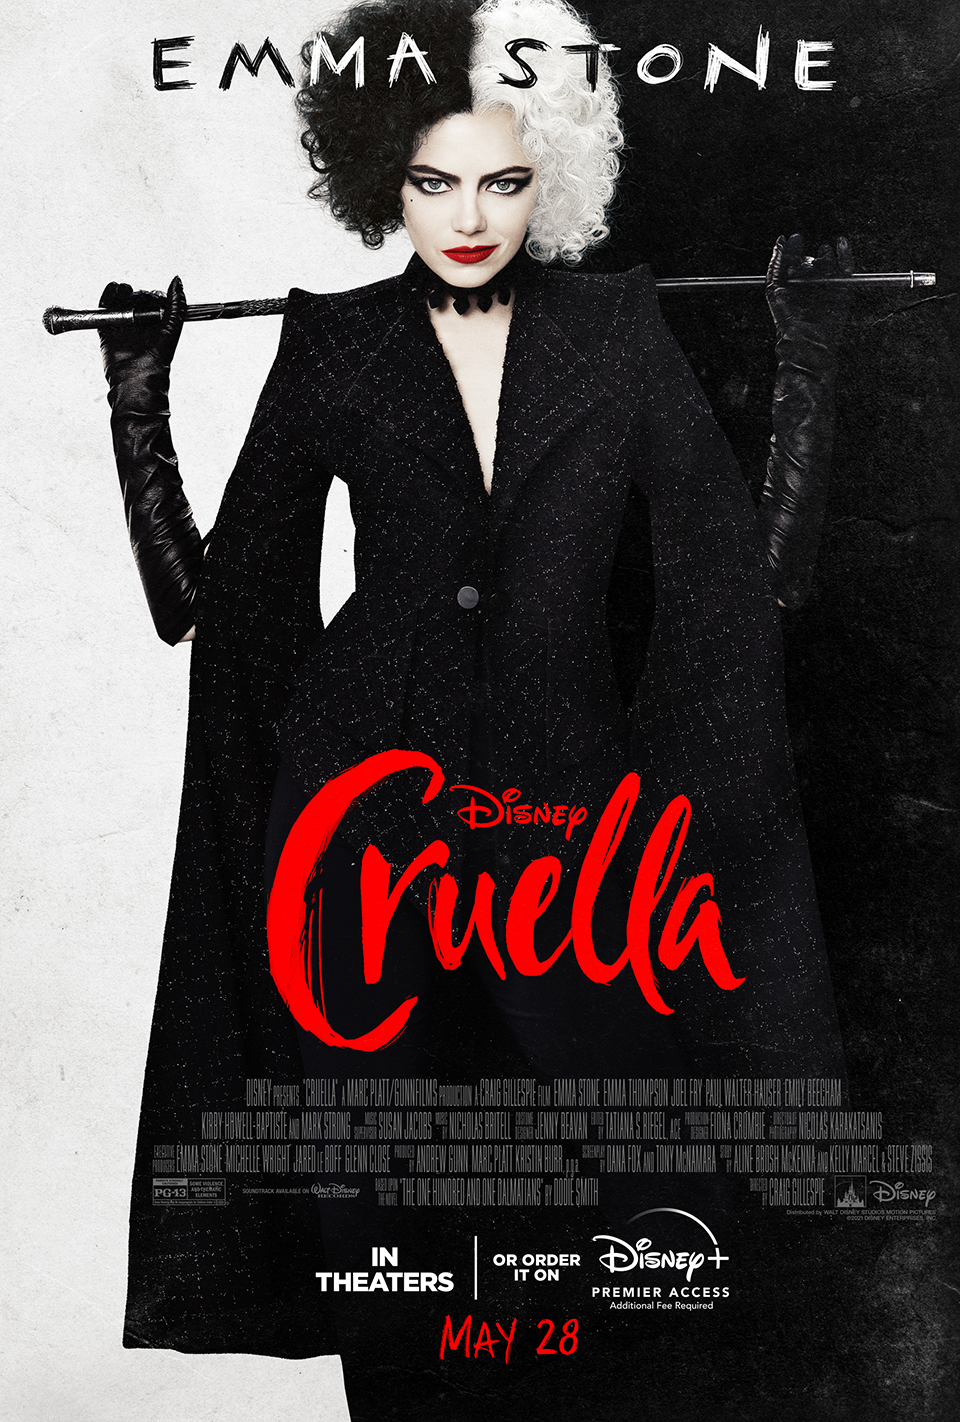 Uni-versal Extras supplied extras for Cruella